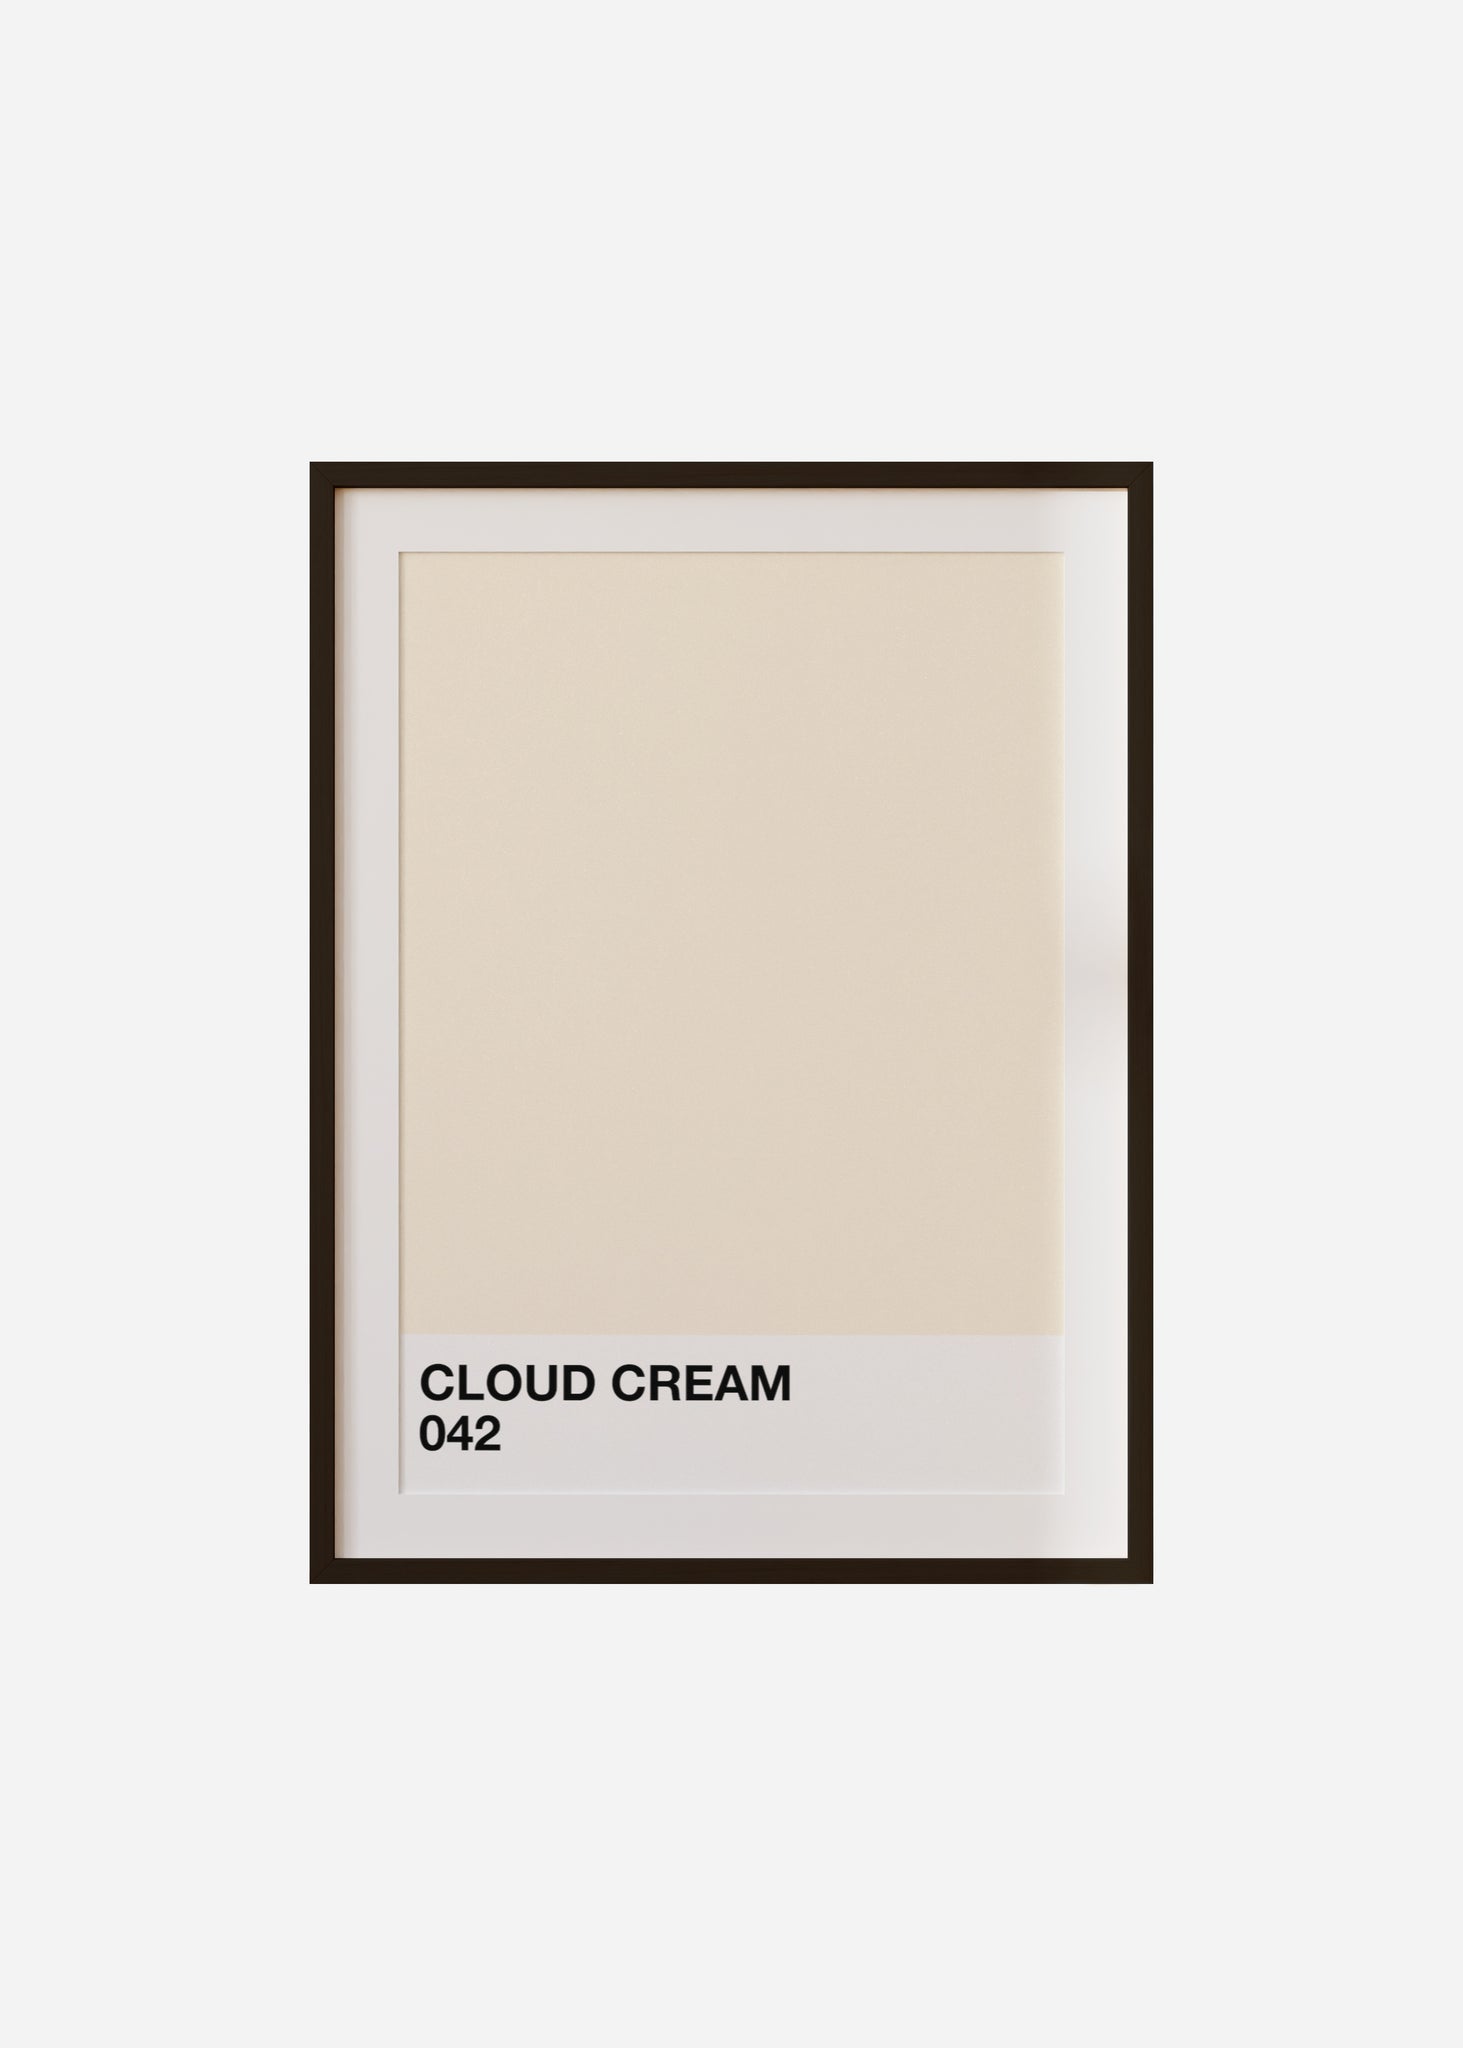 cloud cream Framed & Mounted Print